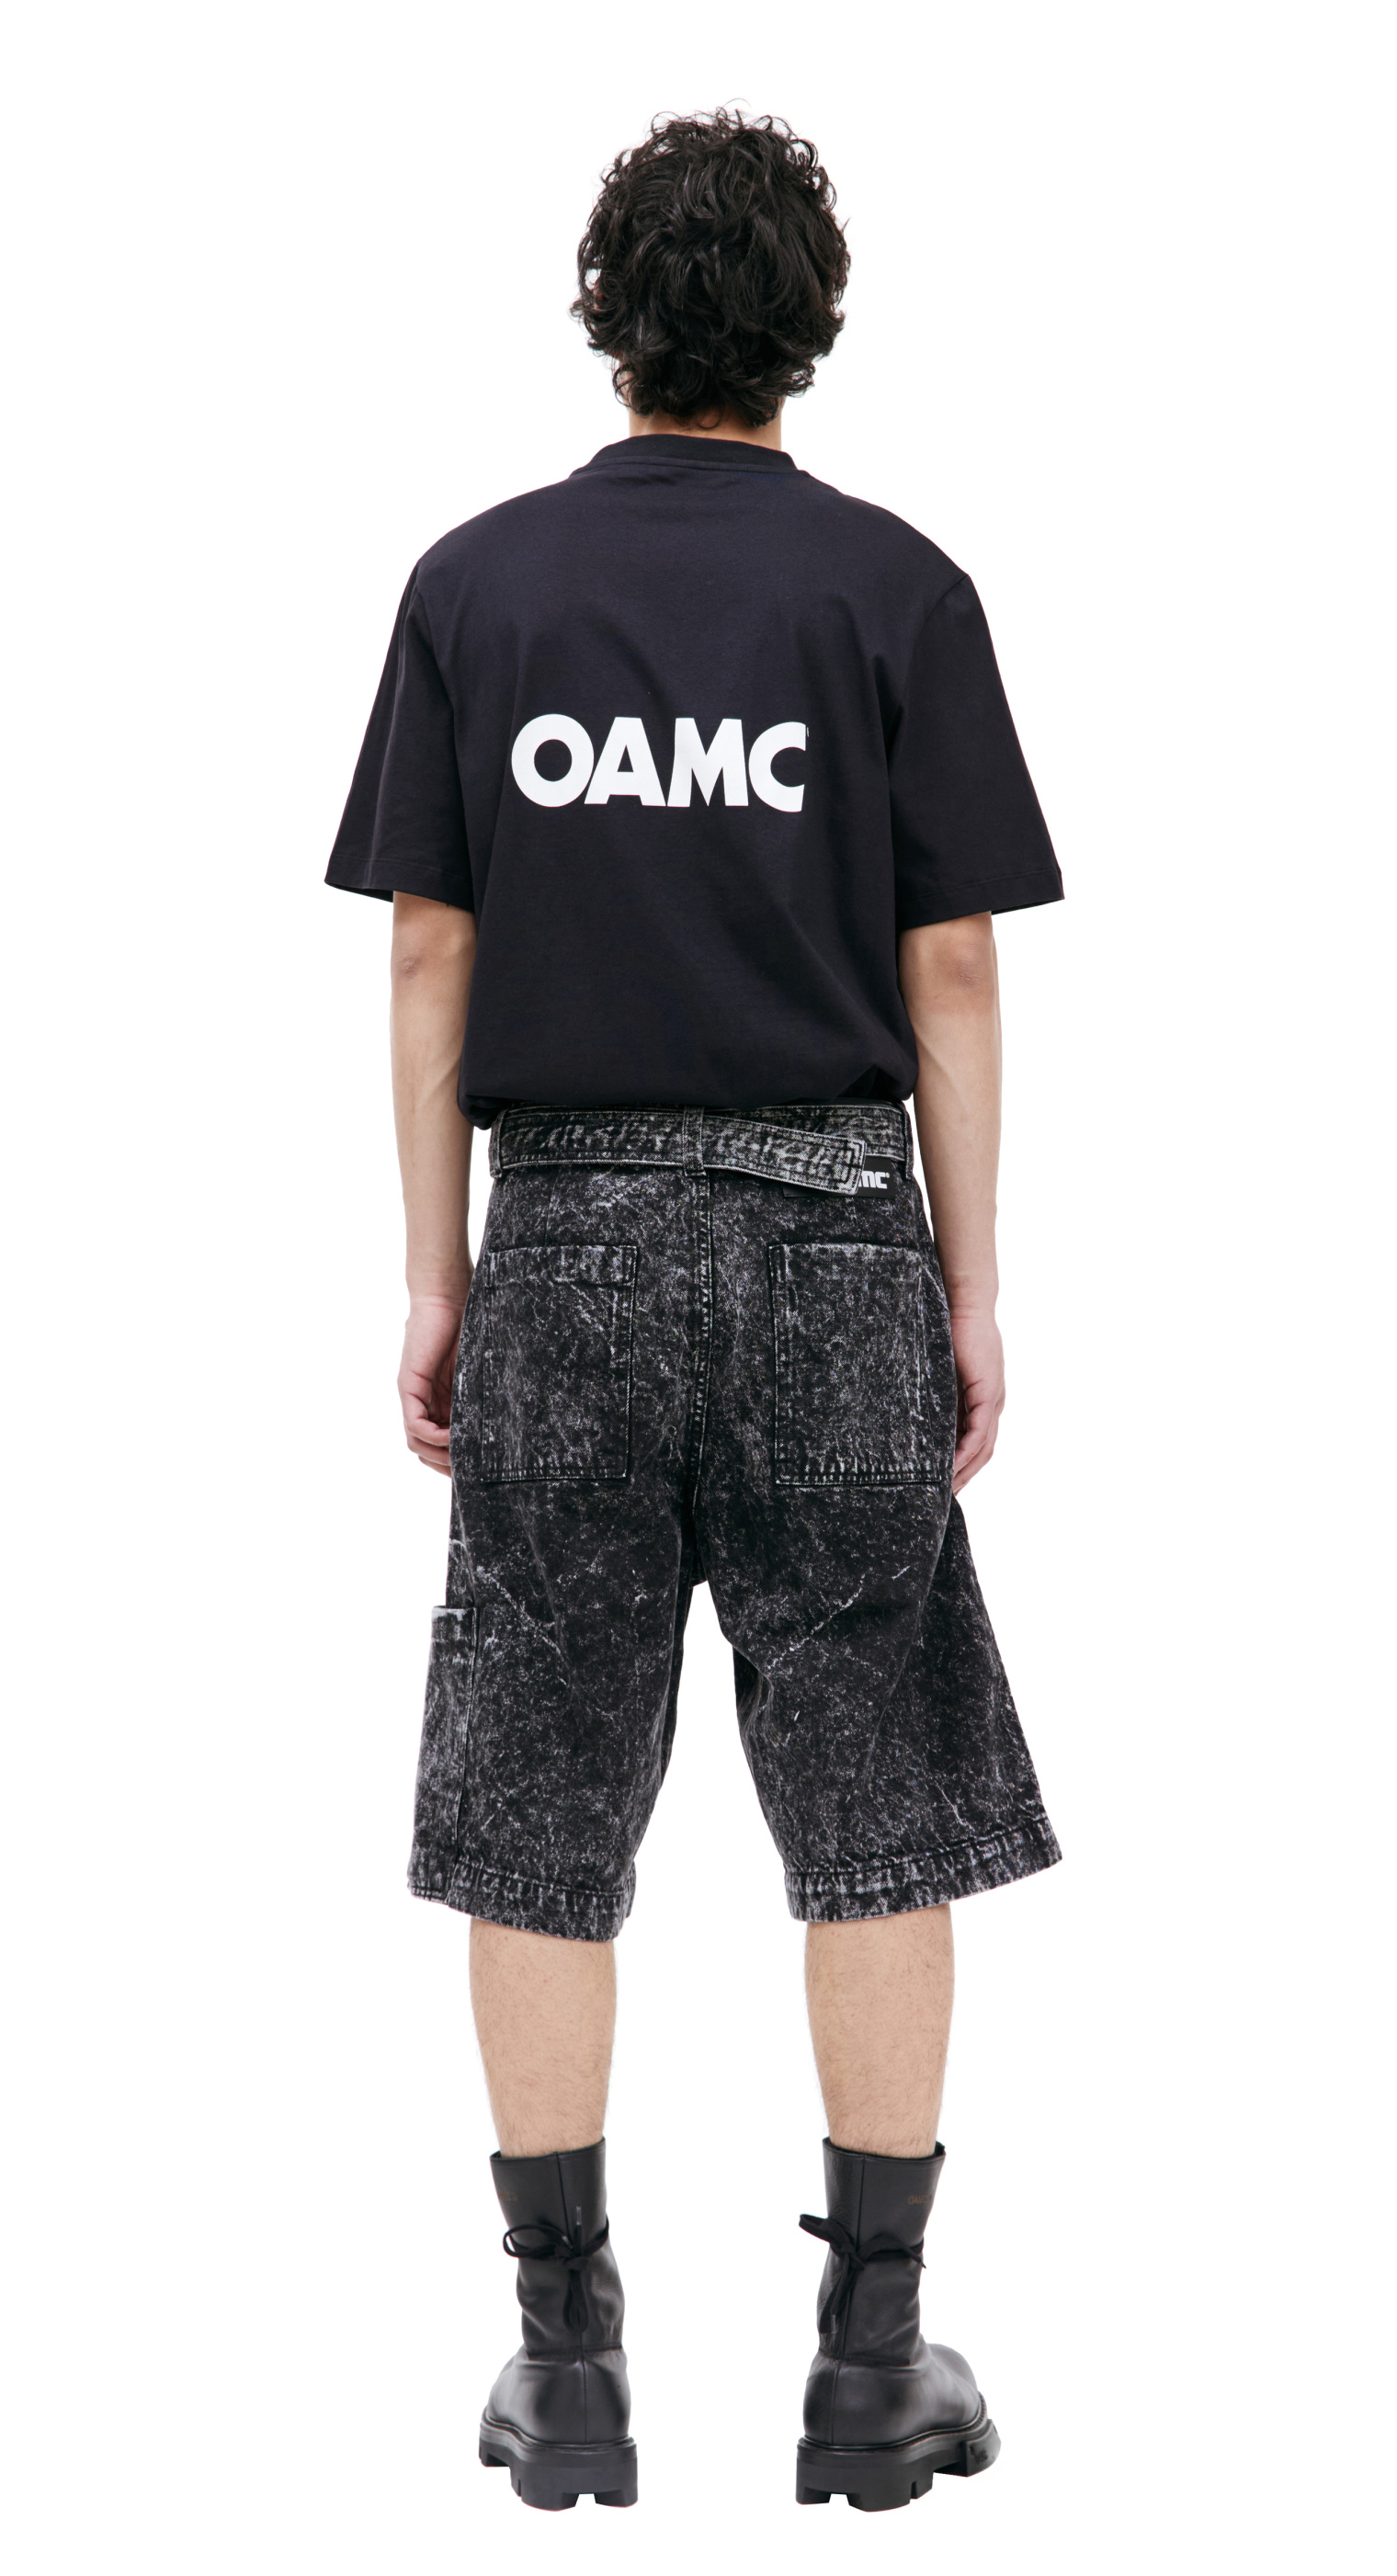 OAMC Grey Jackson shorts